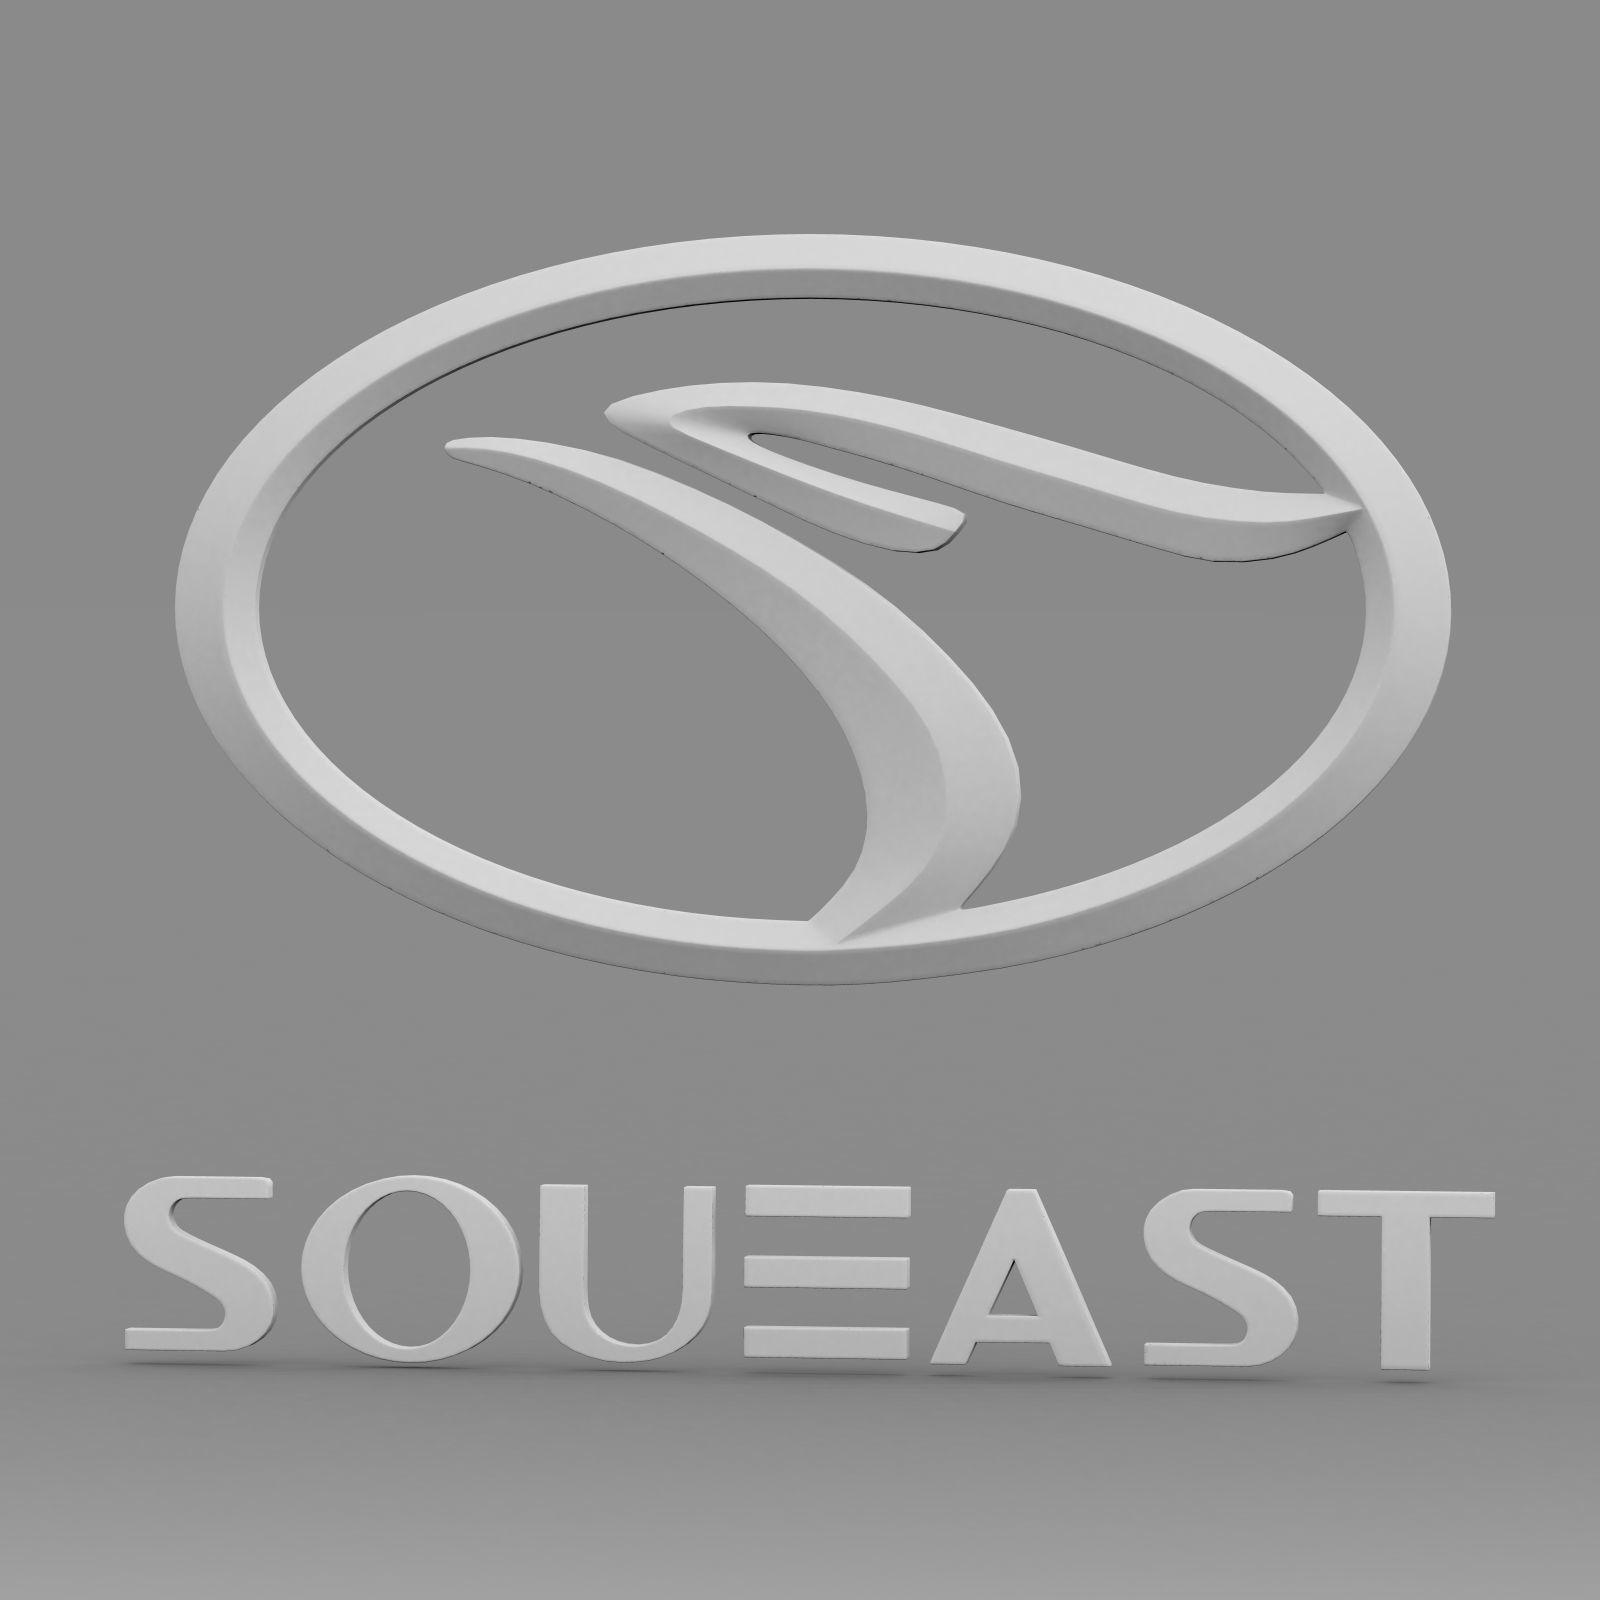 Soueast Logo - of soueast logo 3D model | CGTrader